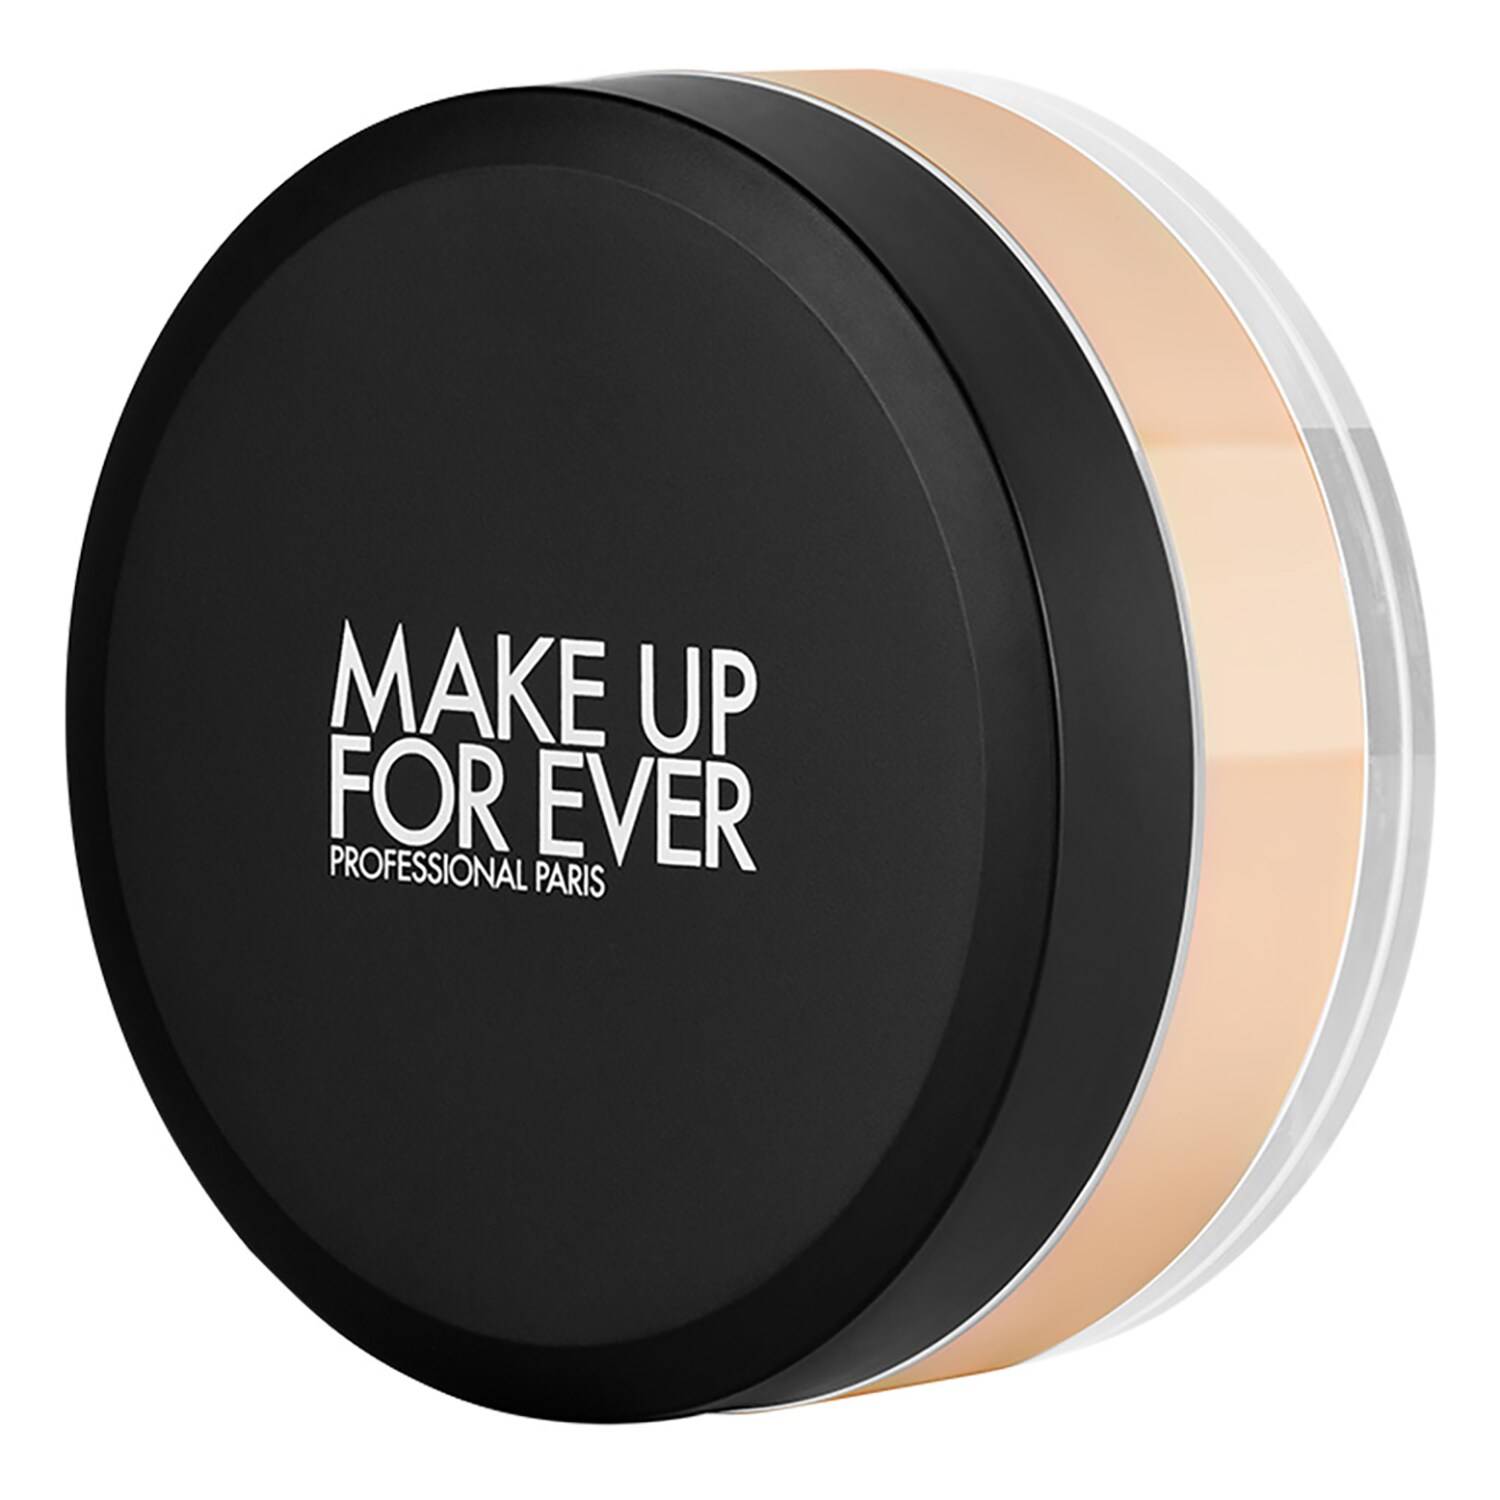 Make Up For Ever Hd Skin Setting Loose Powder 18G 2.1 - Medium Neutral